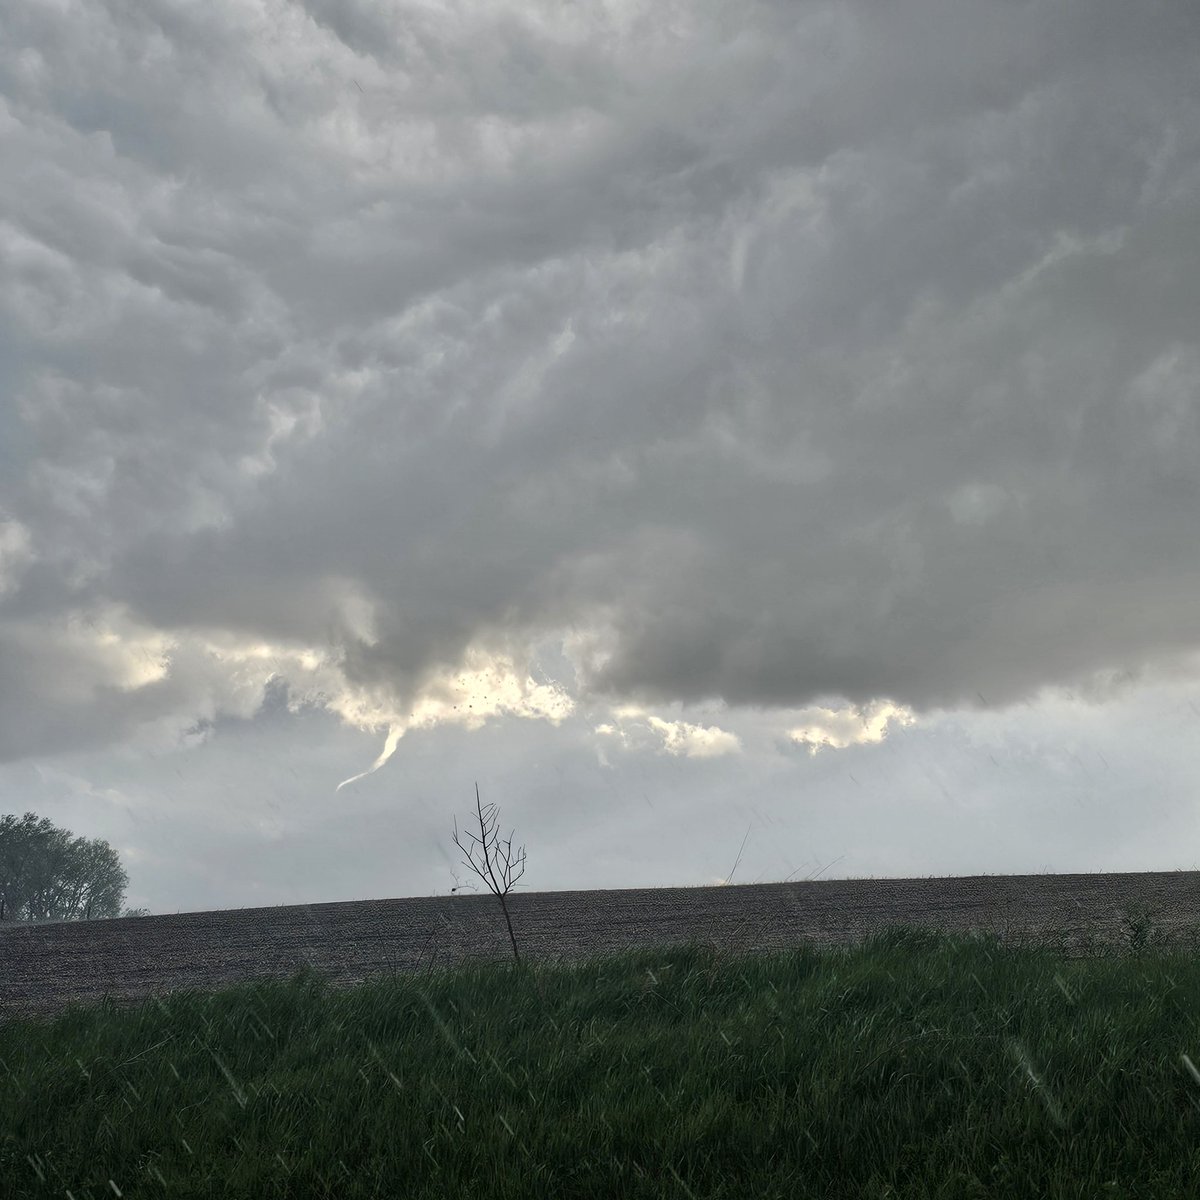 Funnel cloud near Conception Junction MO. @NWSKansasCity @NickBenderKMBC @JacobLanierWx @ryanhallyall #MOwx